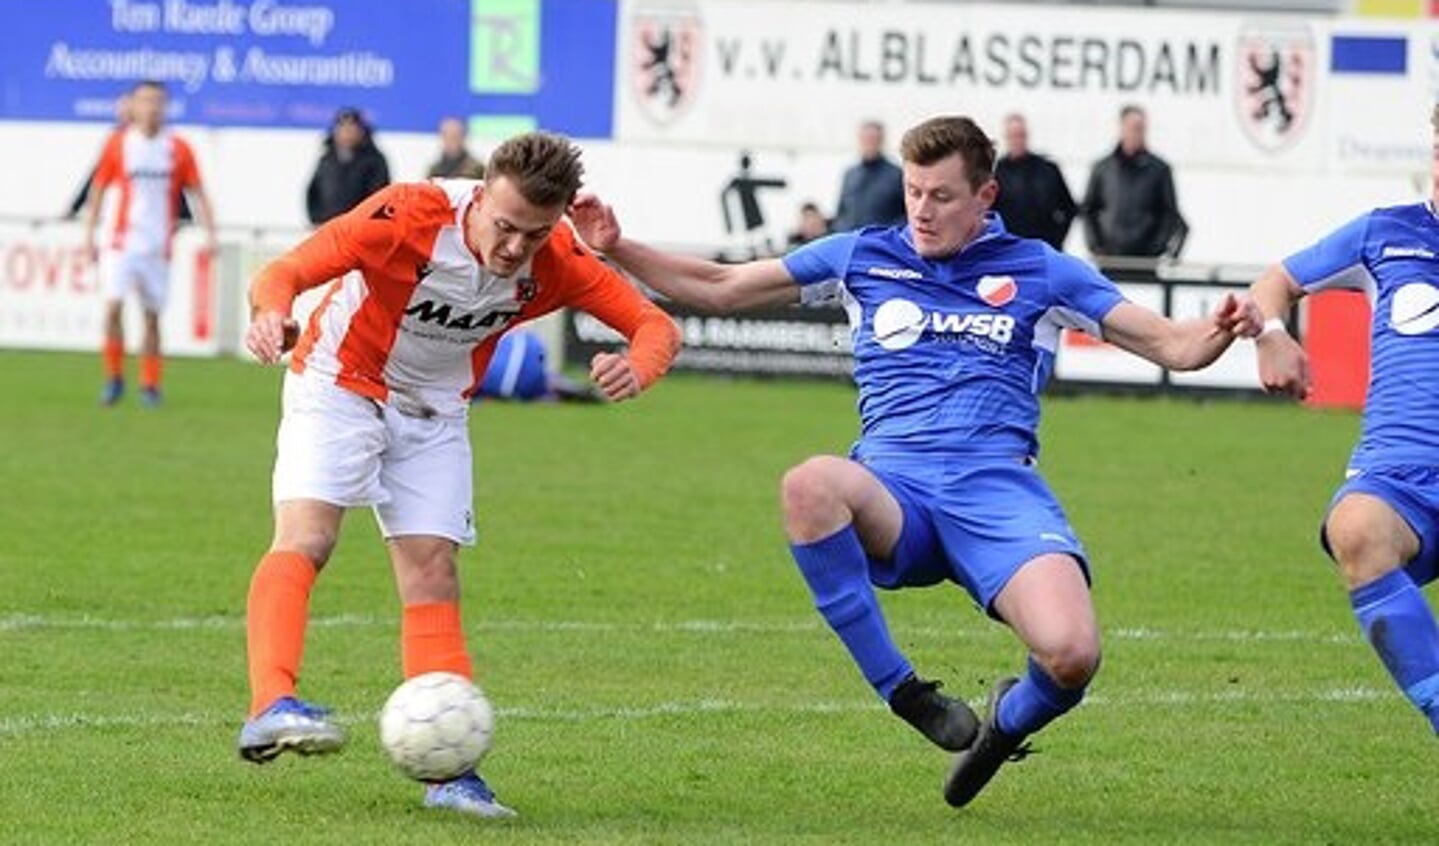 • Alblasserdam - Hardinxveld (2-0).